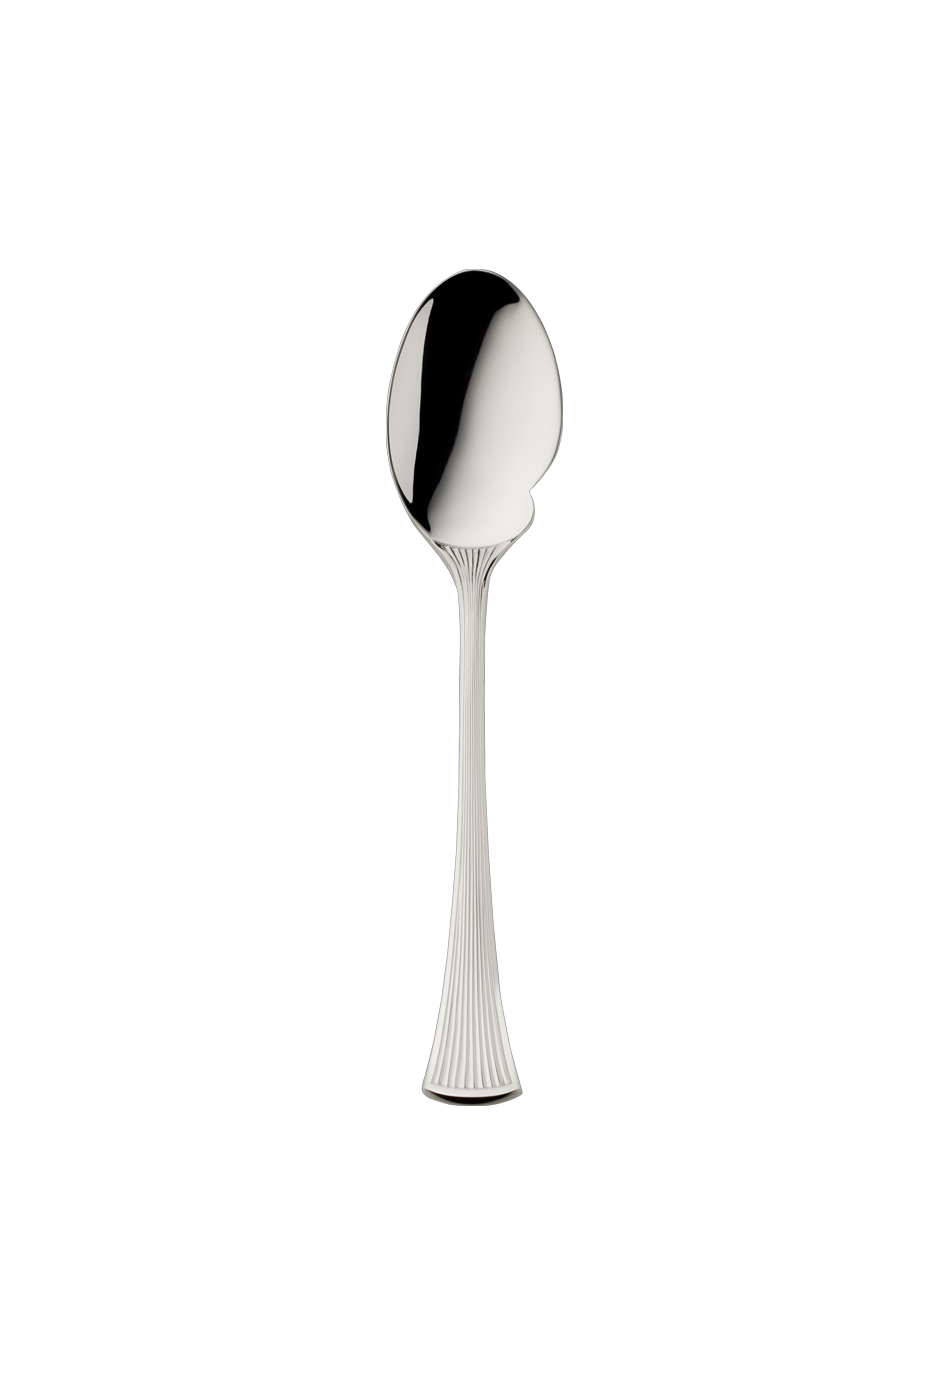 Avenue Gourmet spoon (150g massive silverplated)